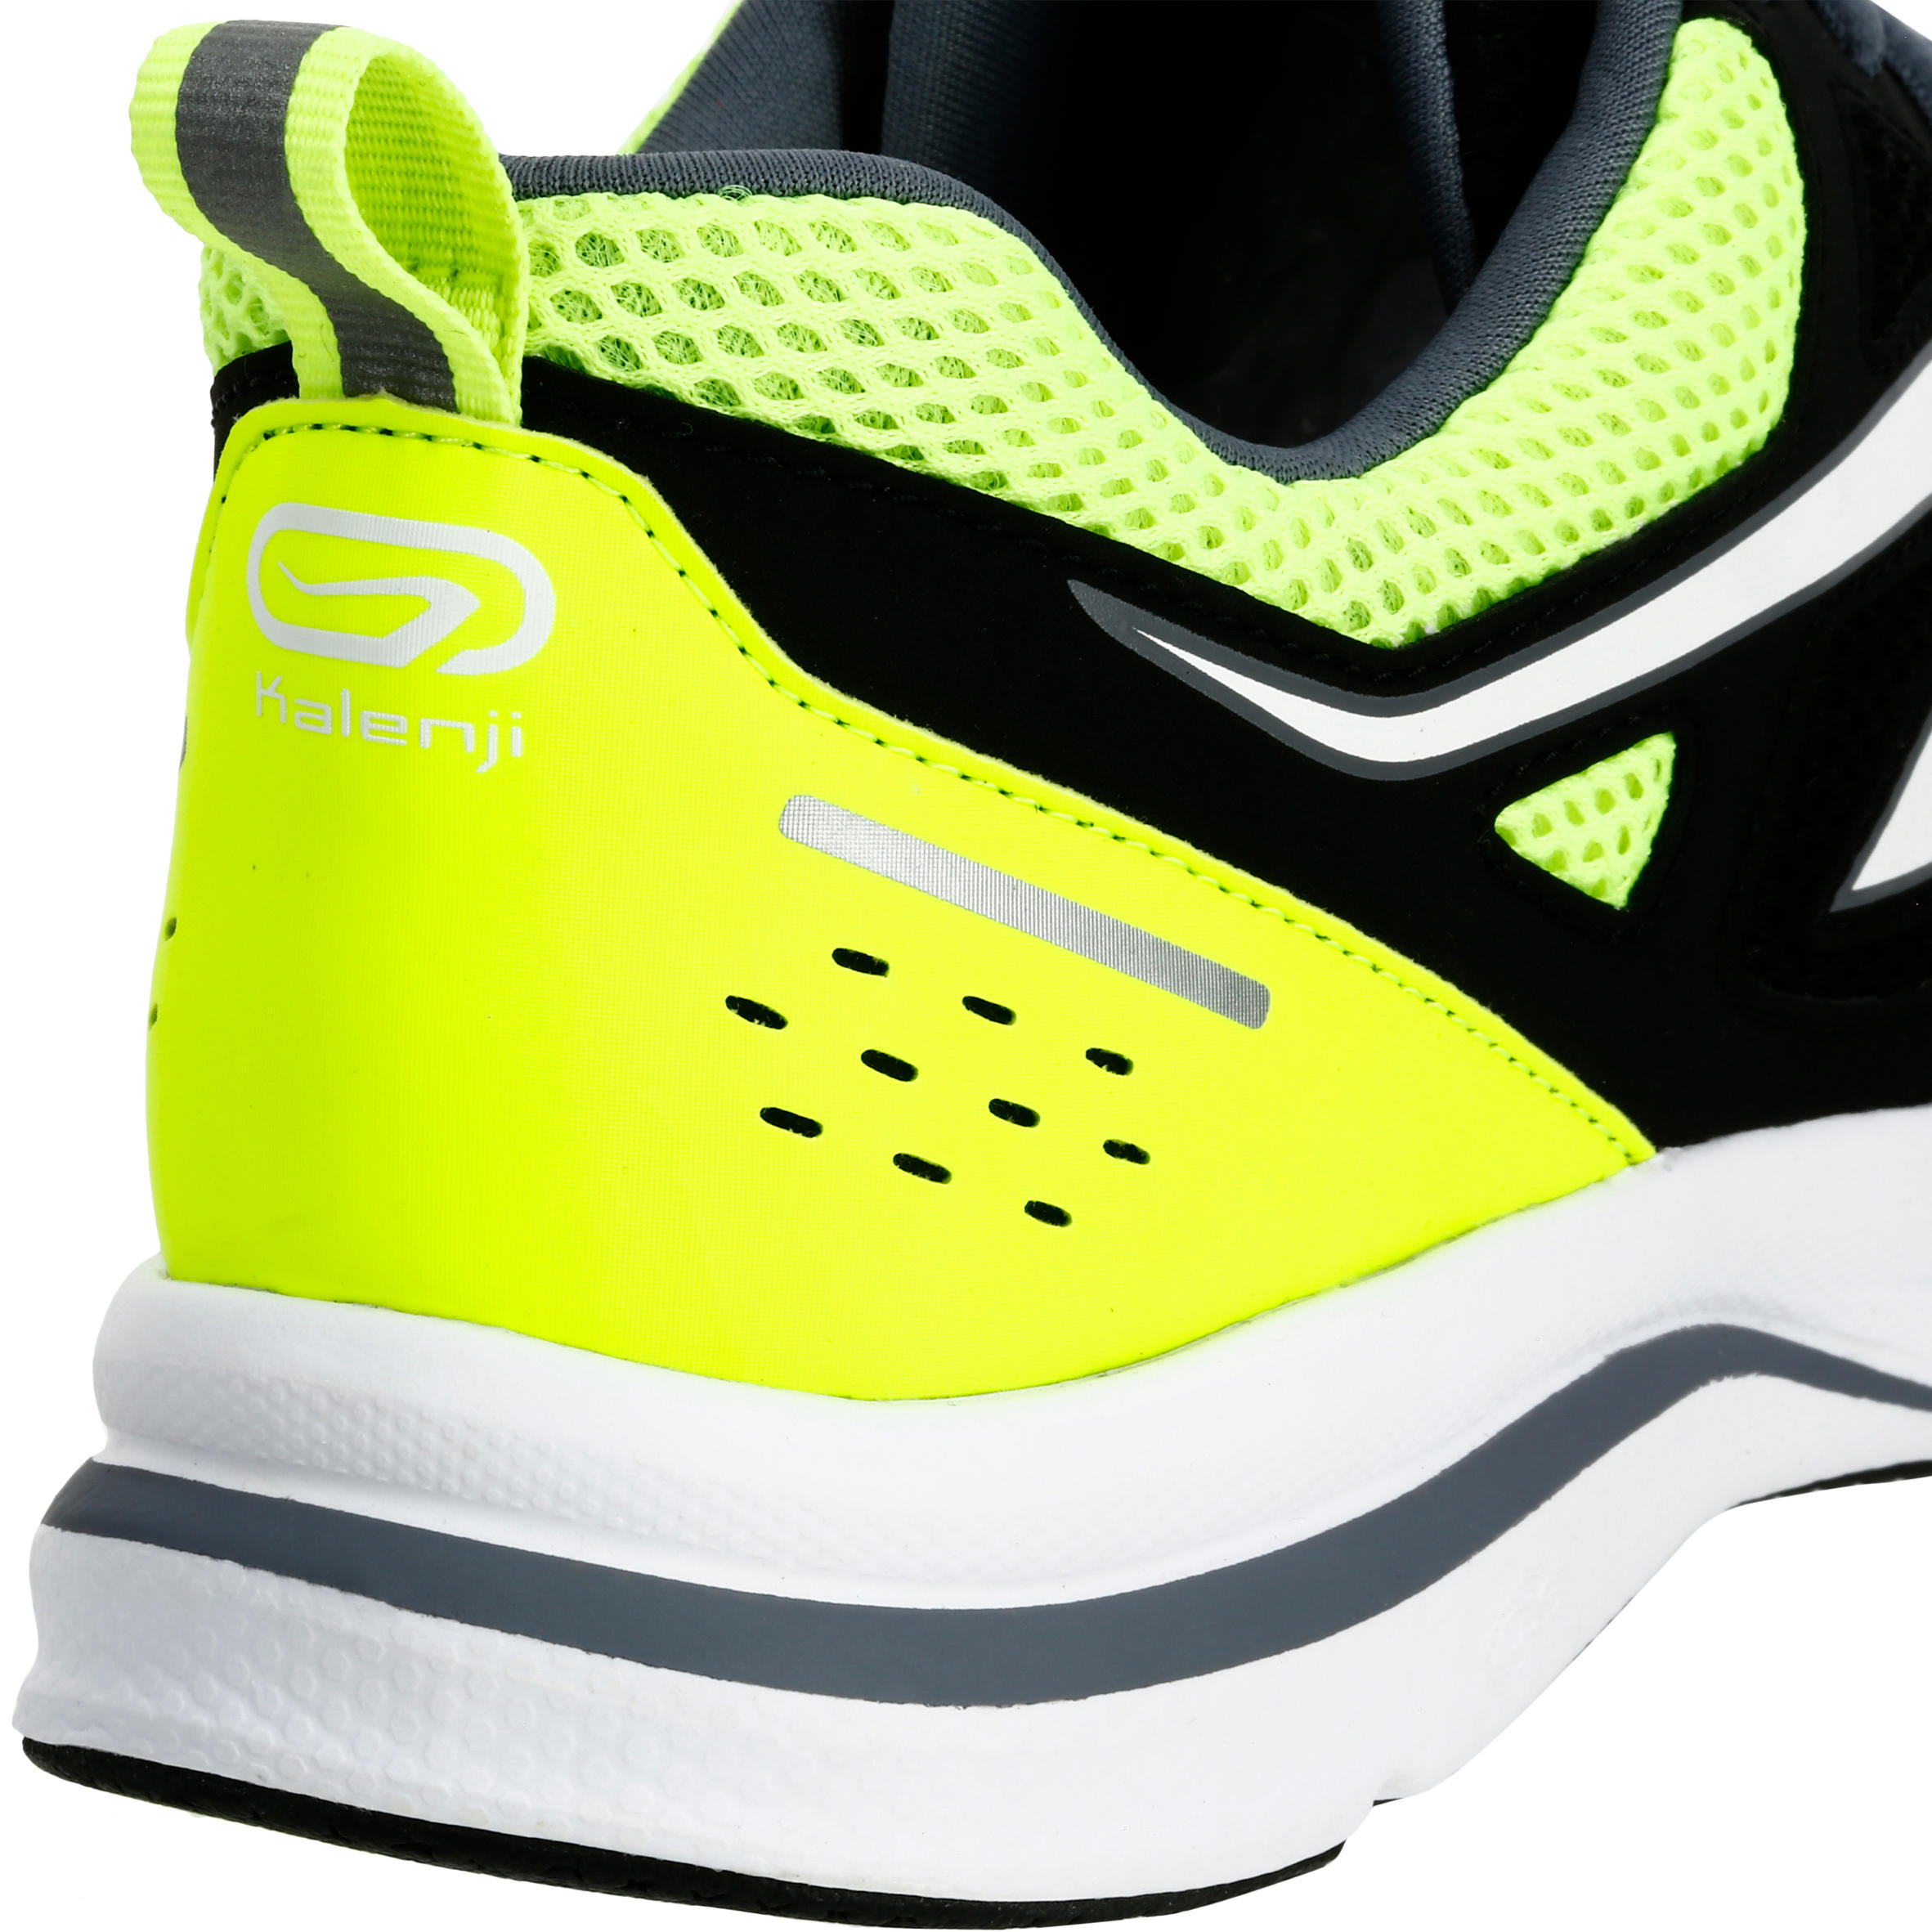 decathlon running shoes online